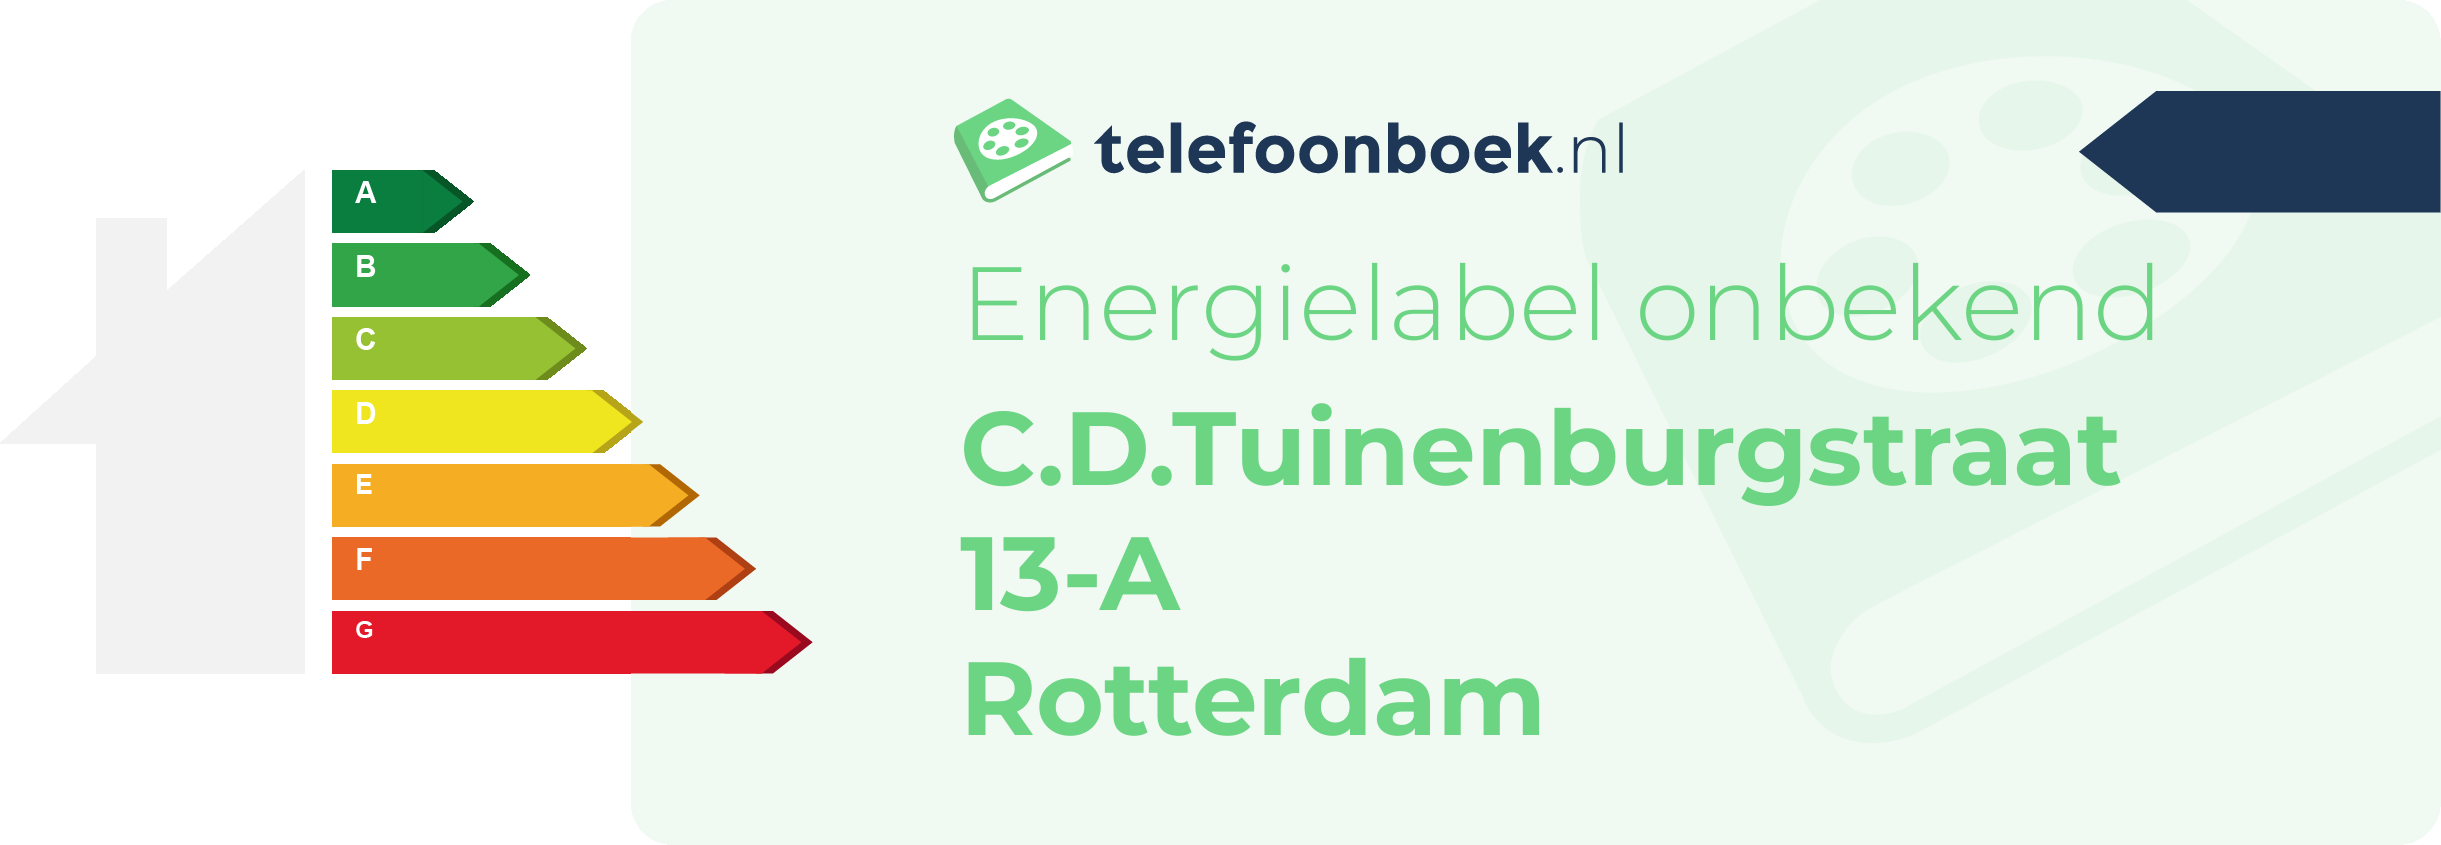 Energielabel C.D.Tuinenburgstraat 13-A Rotterdam